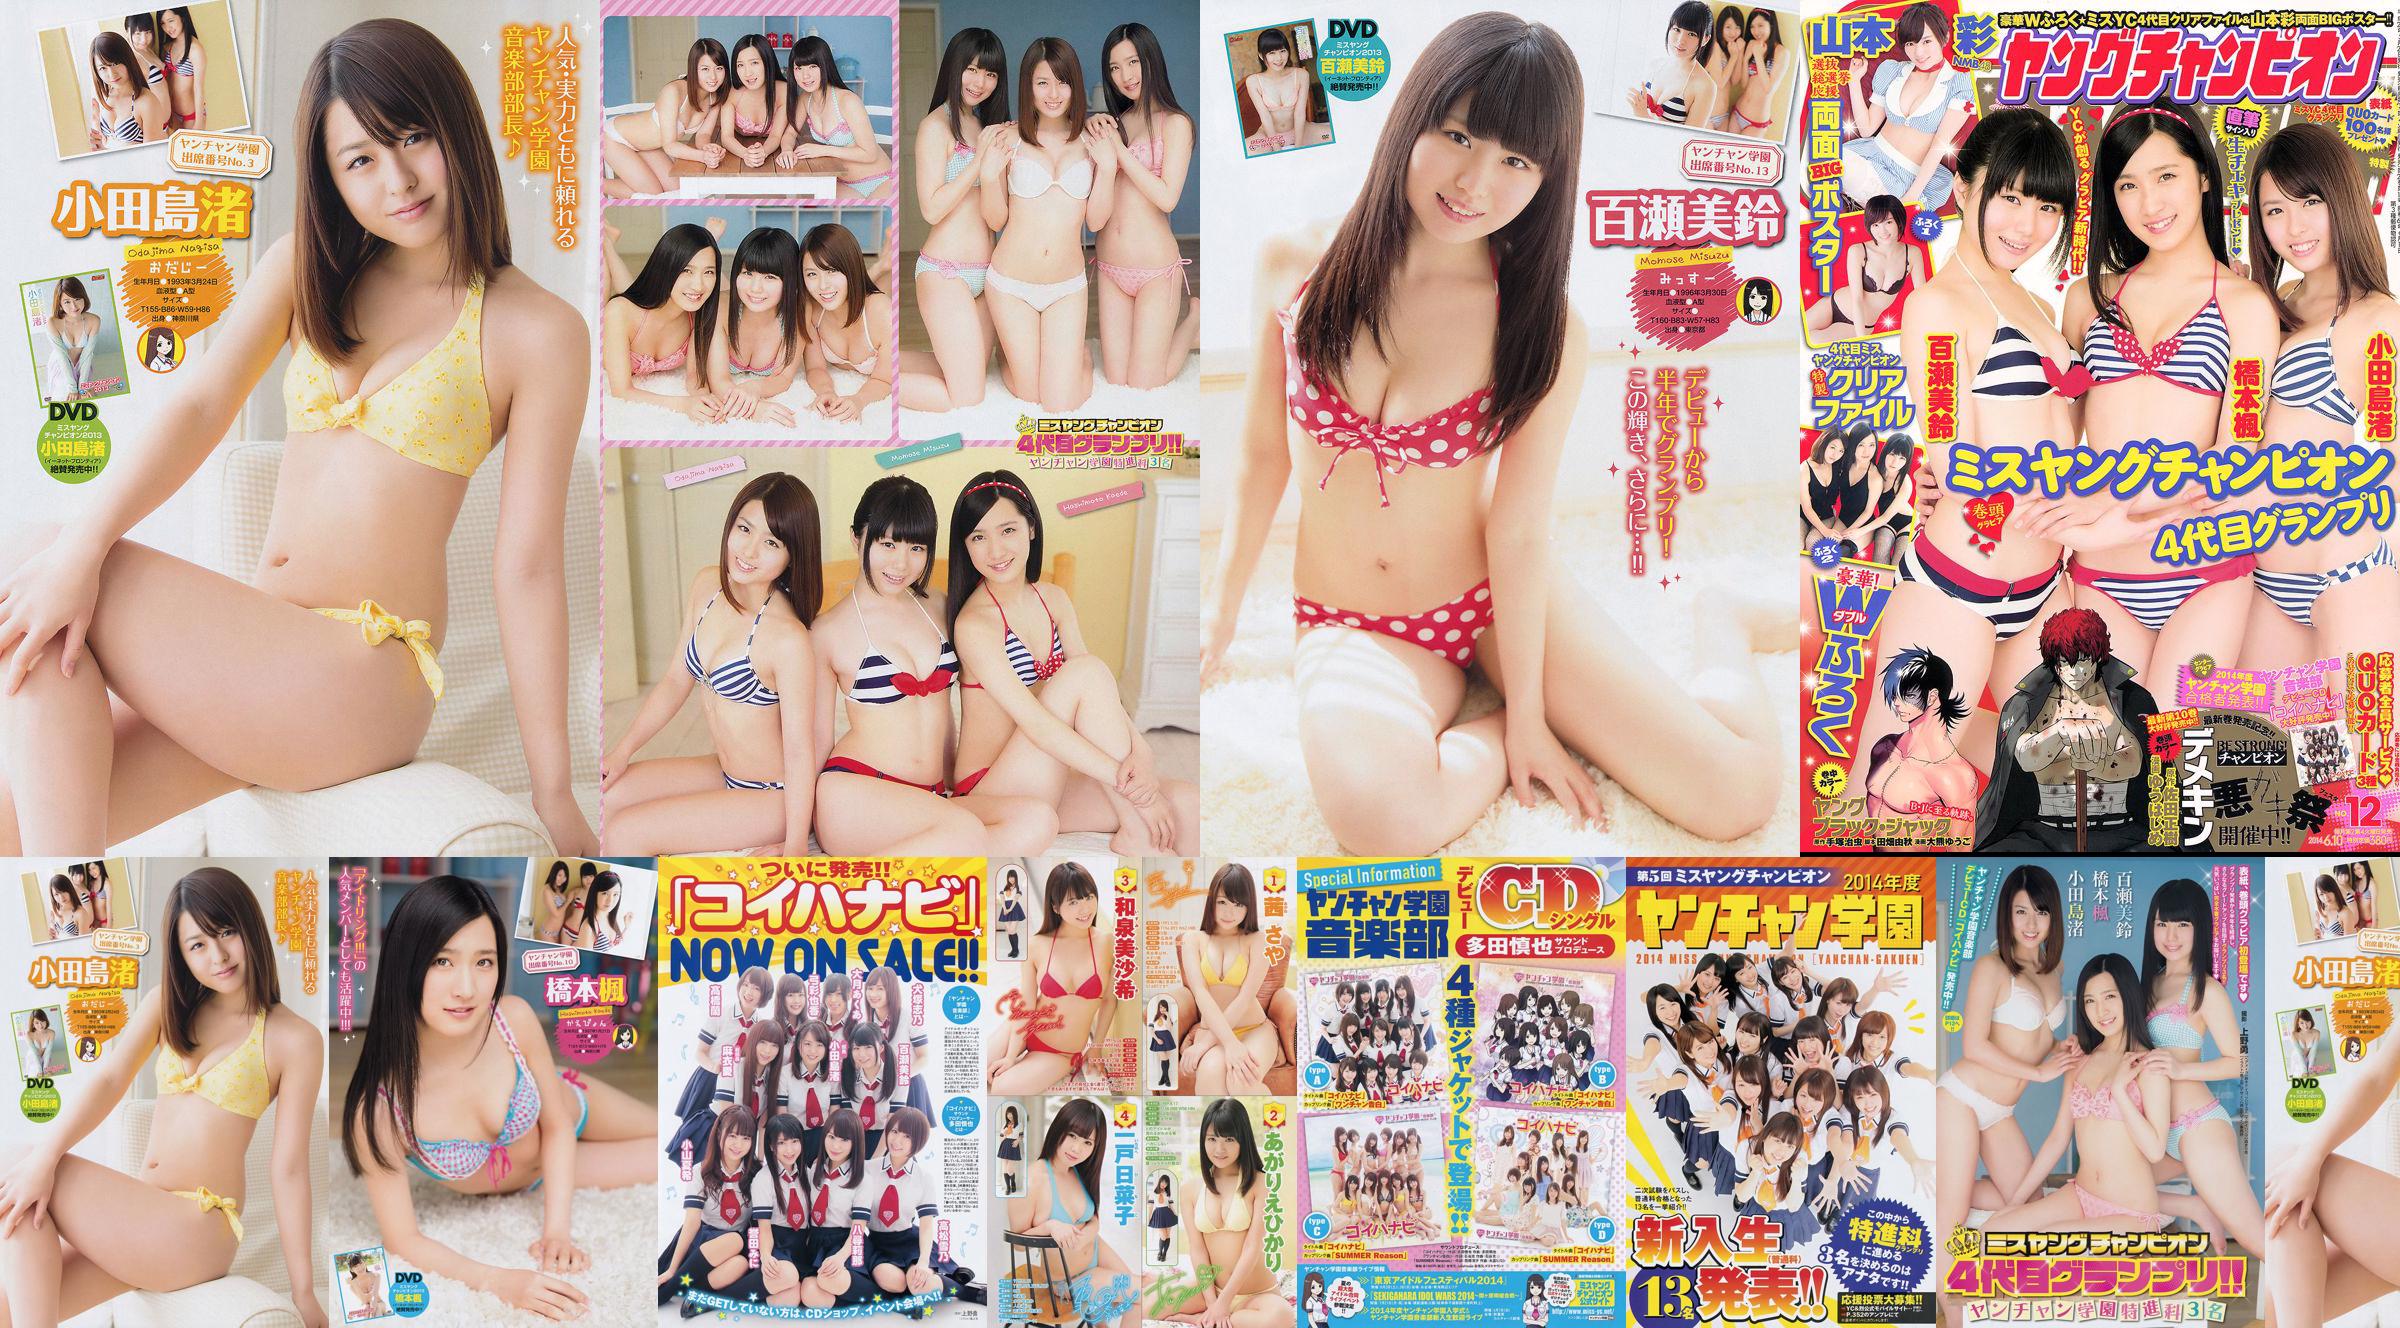 [Jeune Champion] Nagisa Odajima Kaede Hashimoto Misuzu Momose 2014 Photographie n ° 12 No.7d399e Page 1